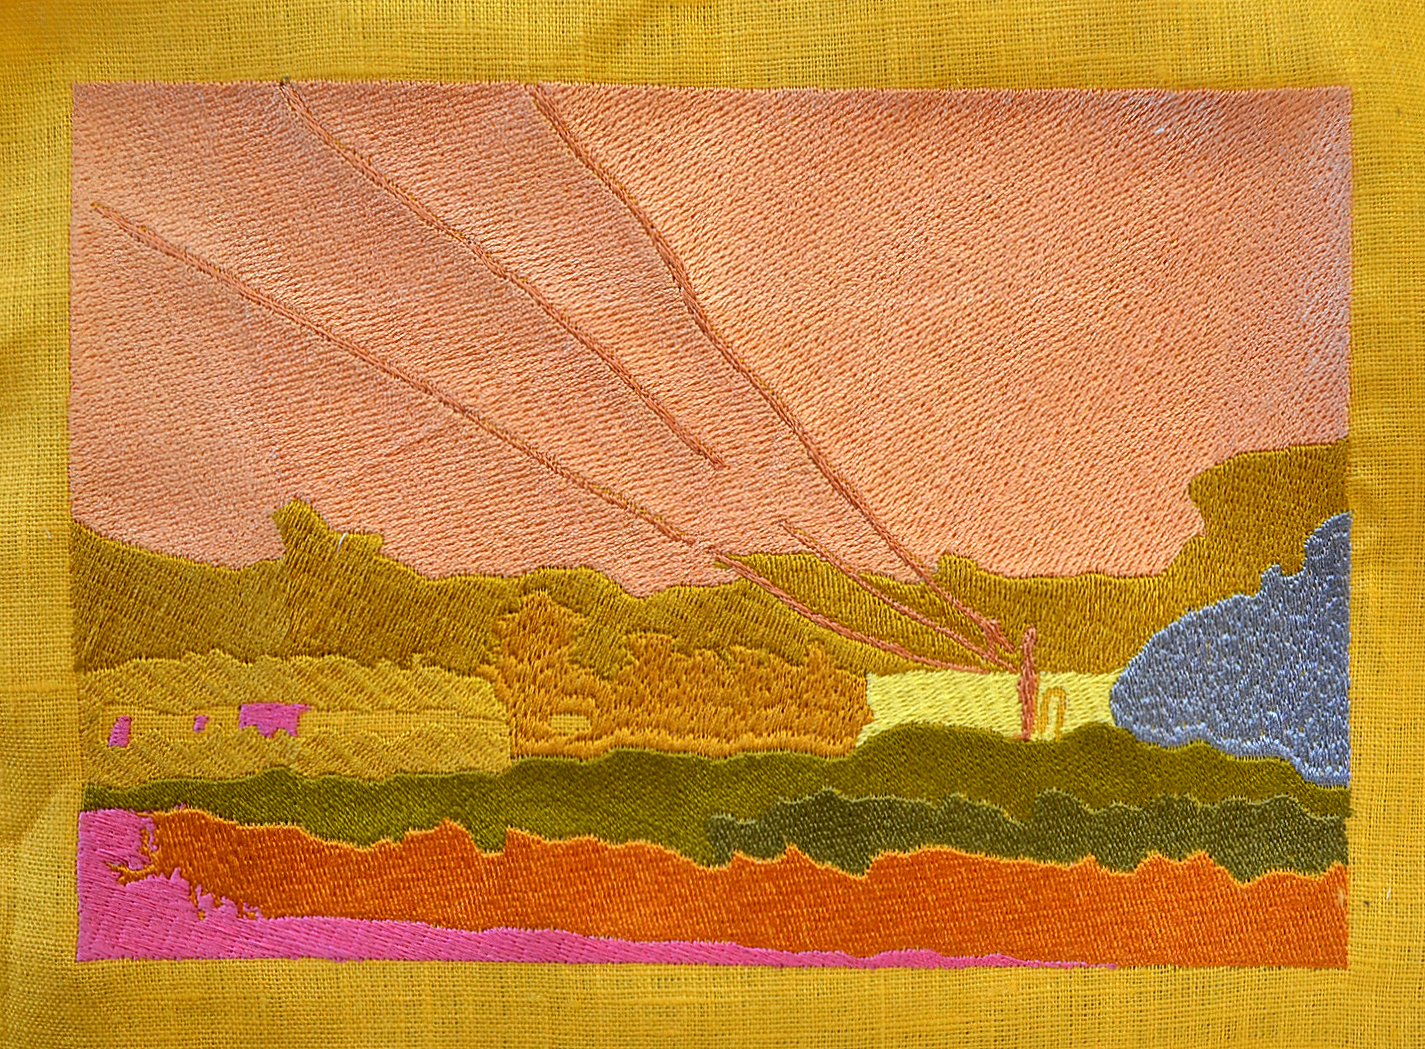 Embroidered Landscape No. 1